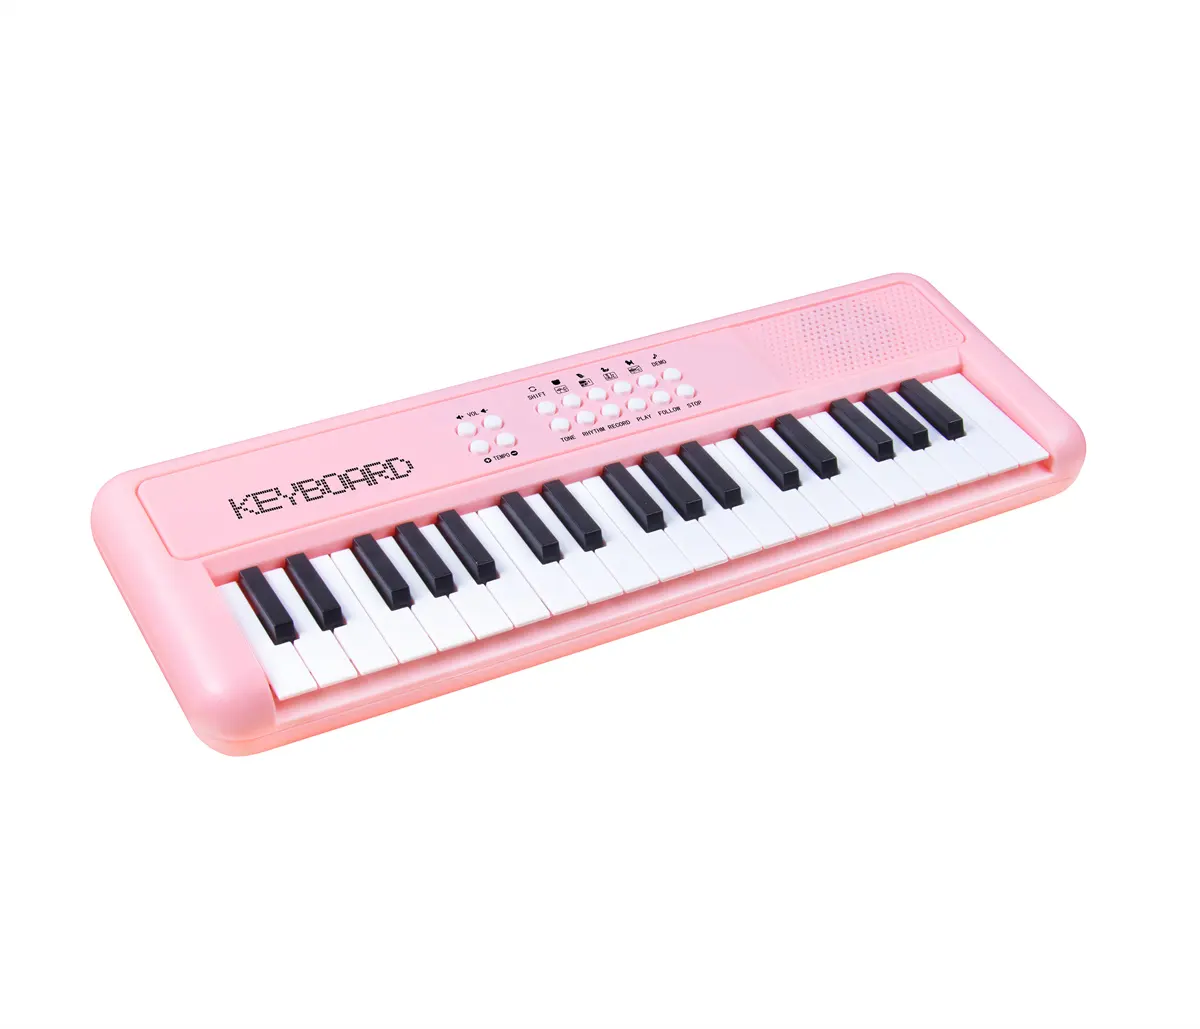 Piano mainan plastik, 37 tombol Organ elektronik Keyboard mainan instrumen musik Synthesizer teclado mainan Keyboard Digital untuk Kds